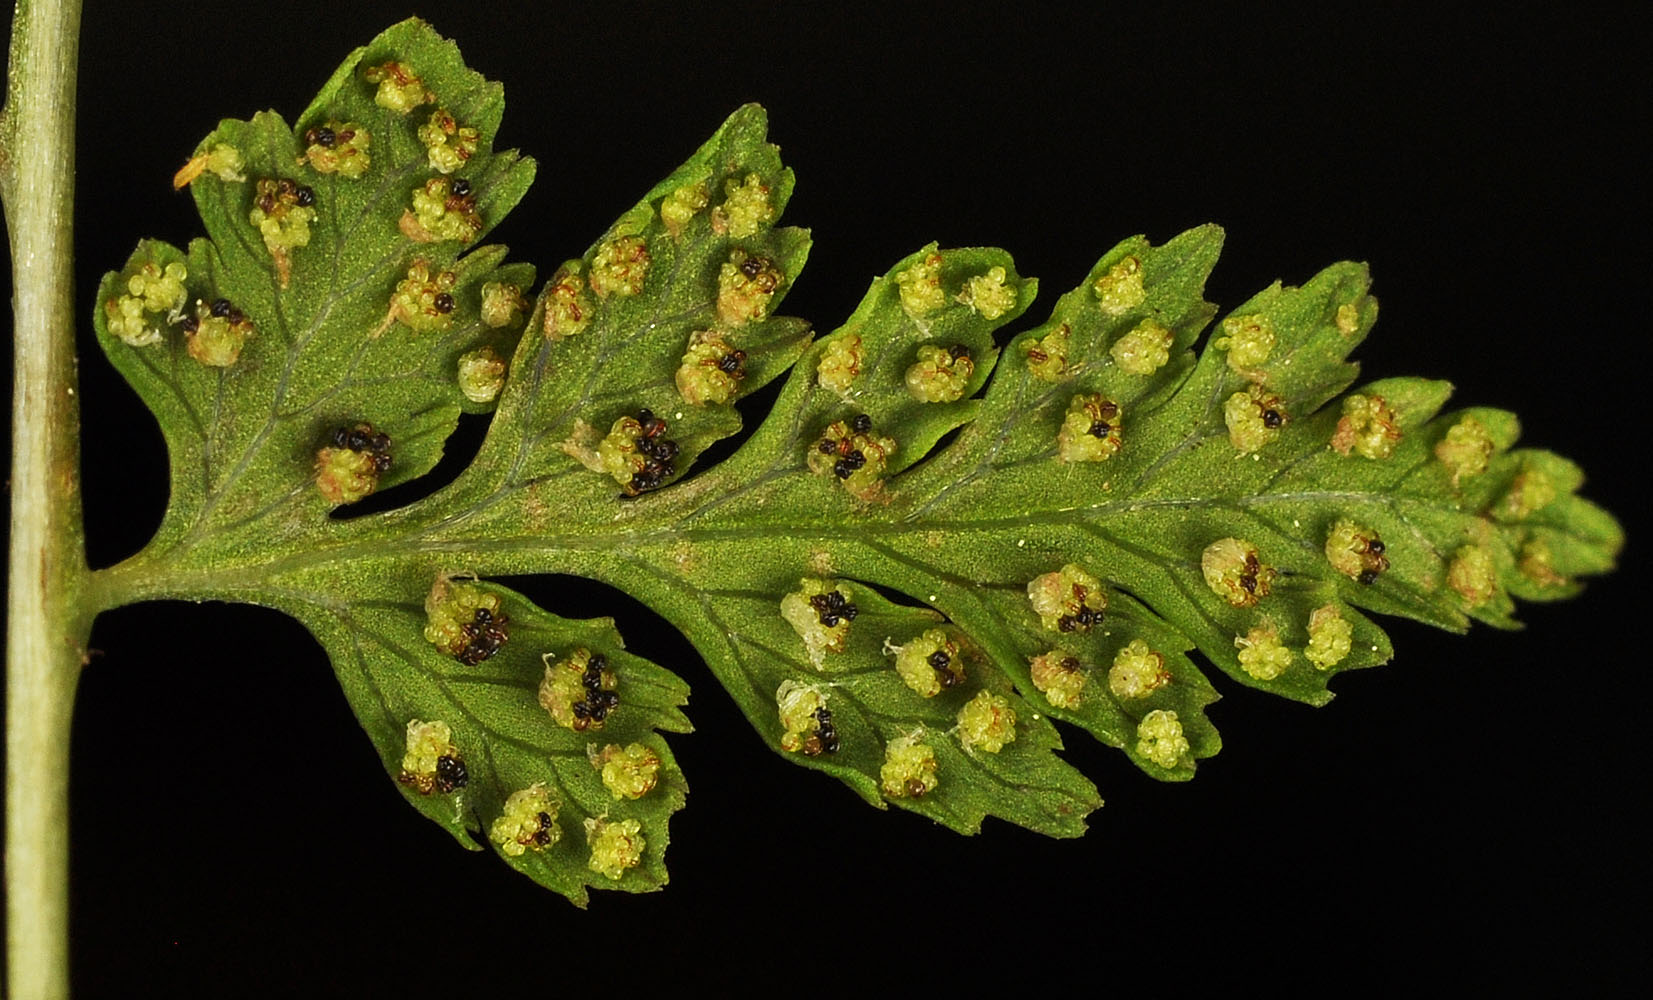 Flora of Eastern Washington Image: Cystopteris fragilis